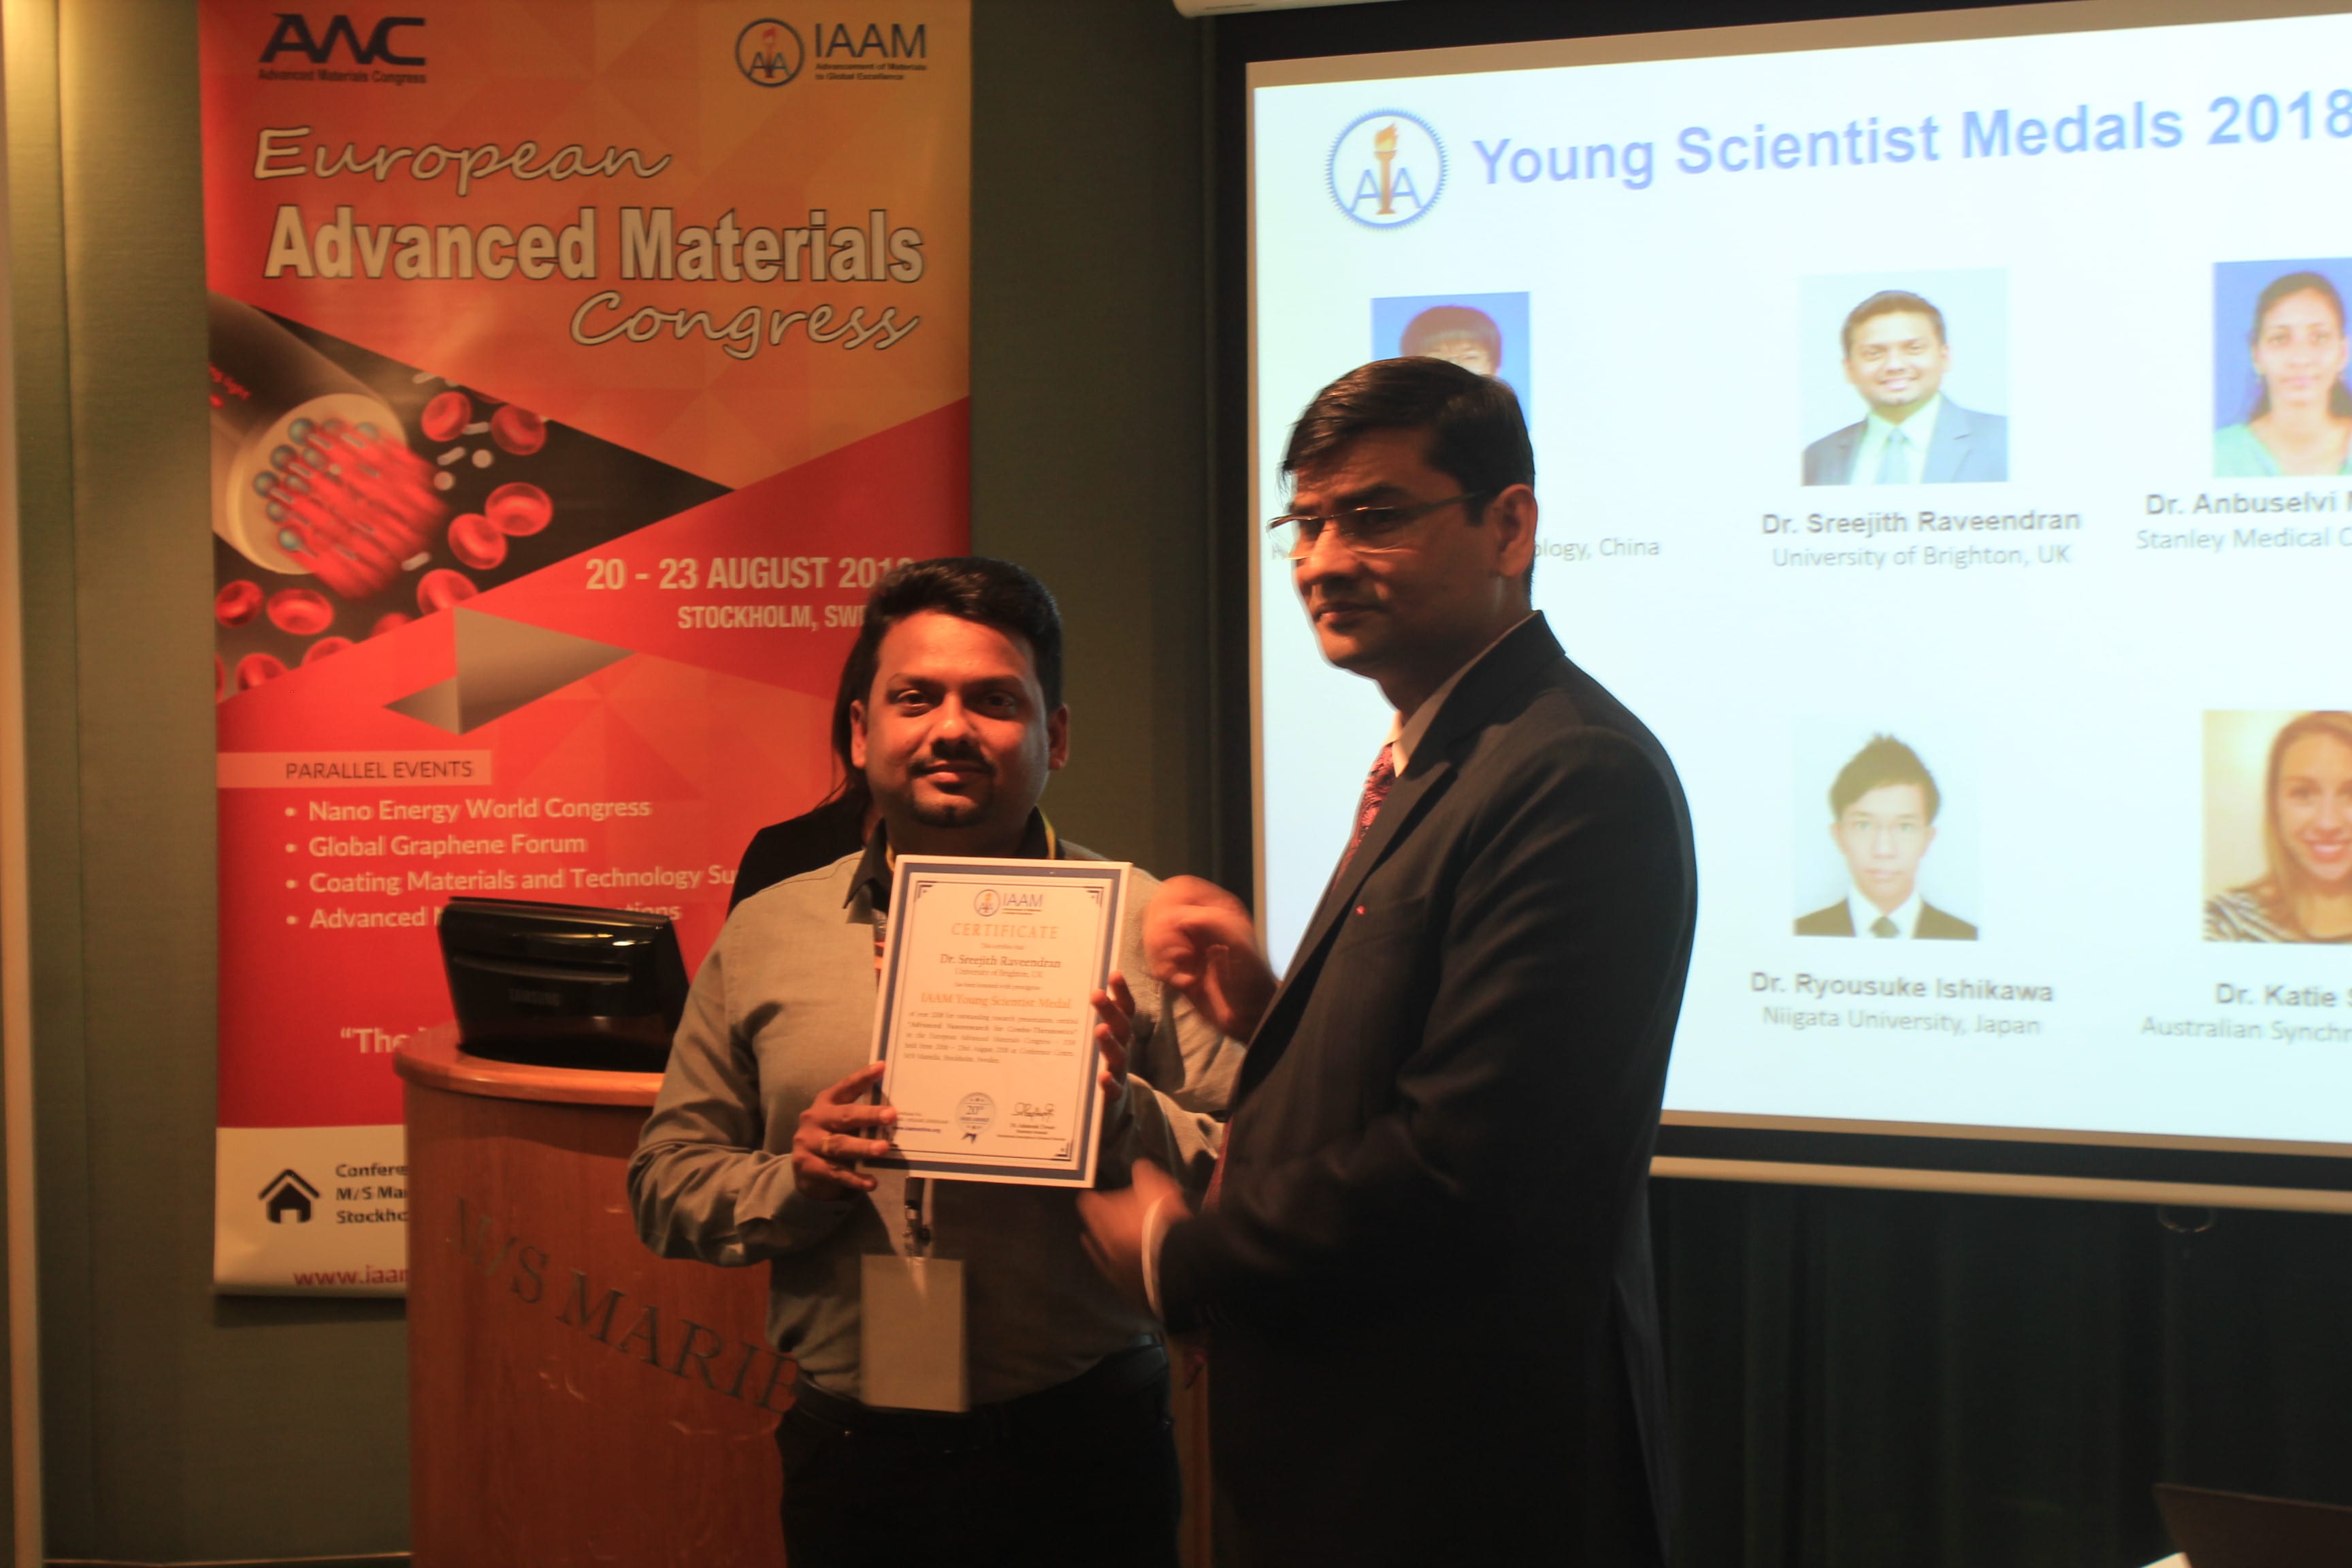 Dr Sreejith Raveendran receiving IAAM award